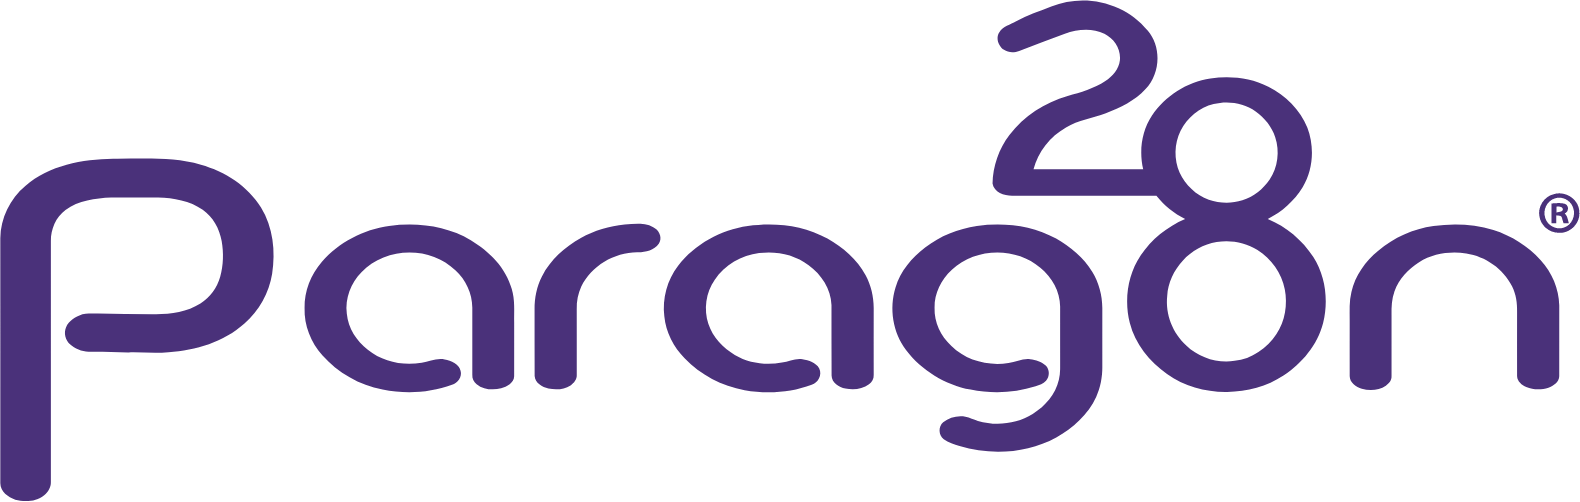 Paragon 28 logo large (transparent PNG)